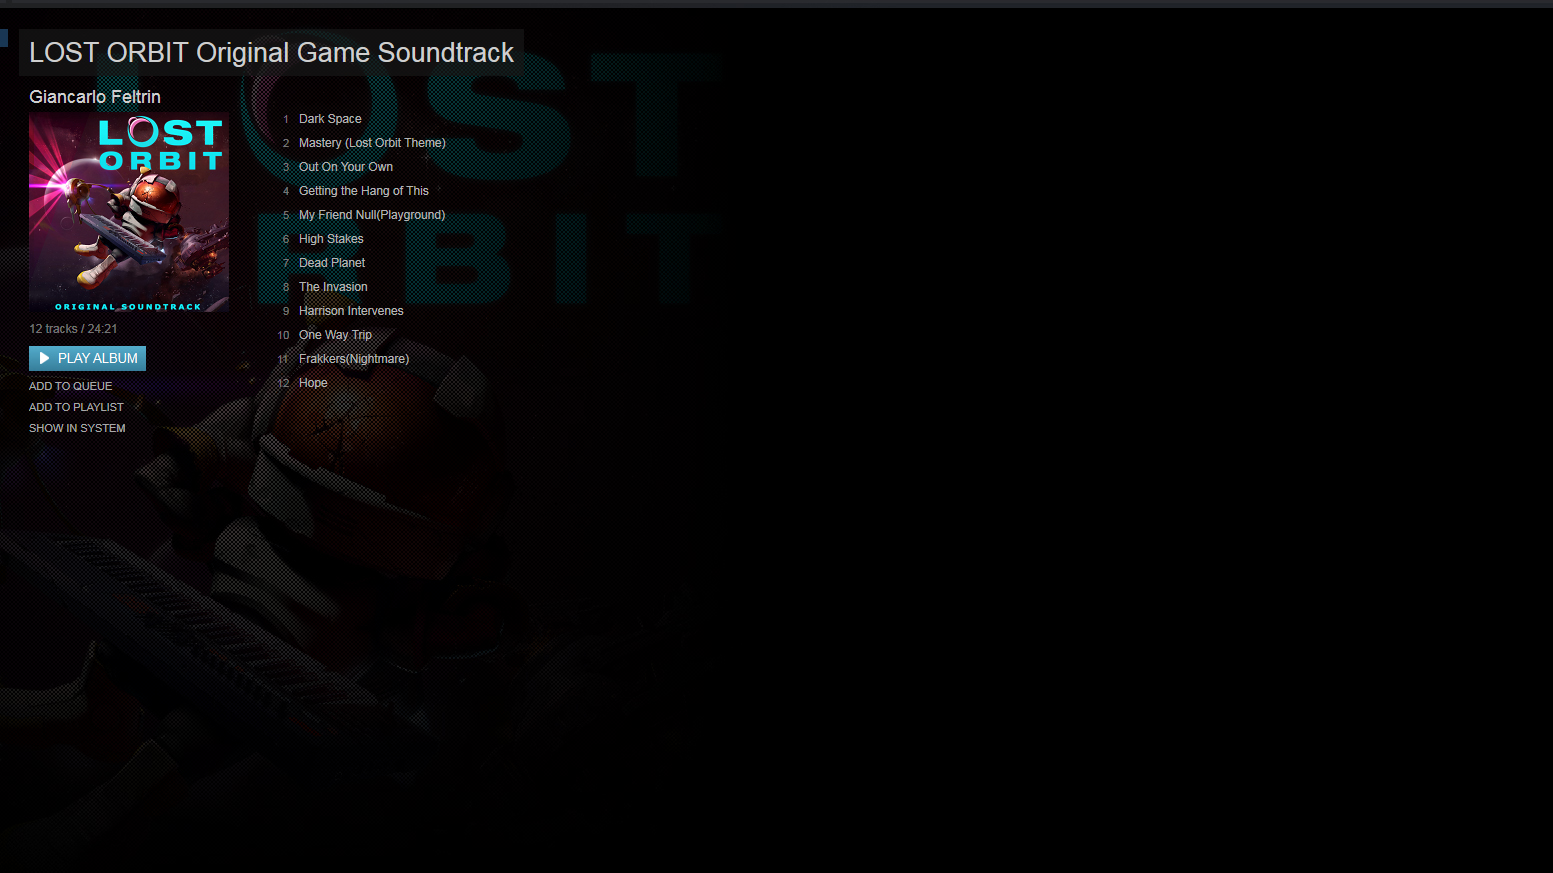 LOST ORBIT - Original Soundtrack Featured Screenshot #1